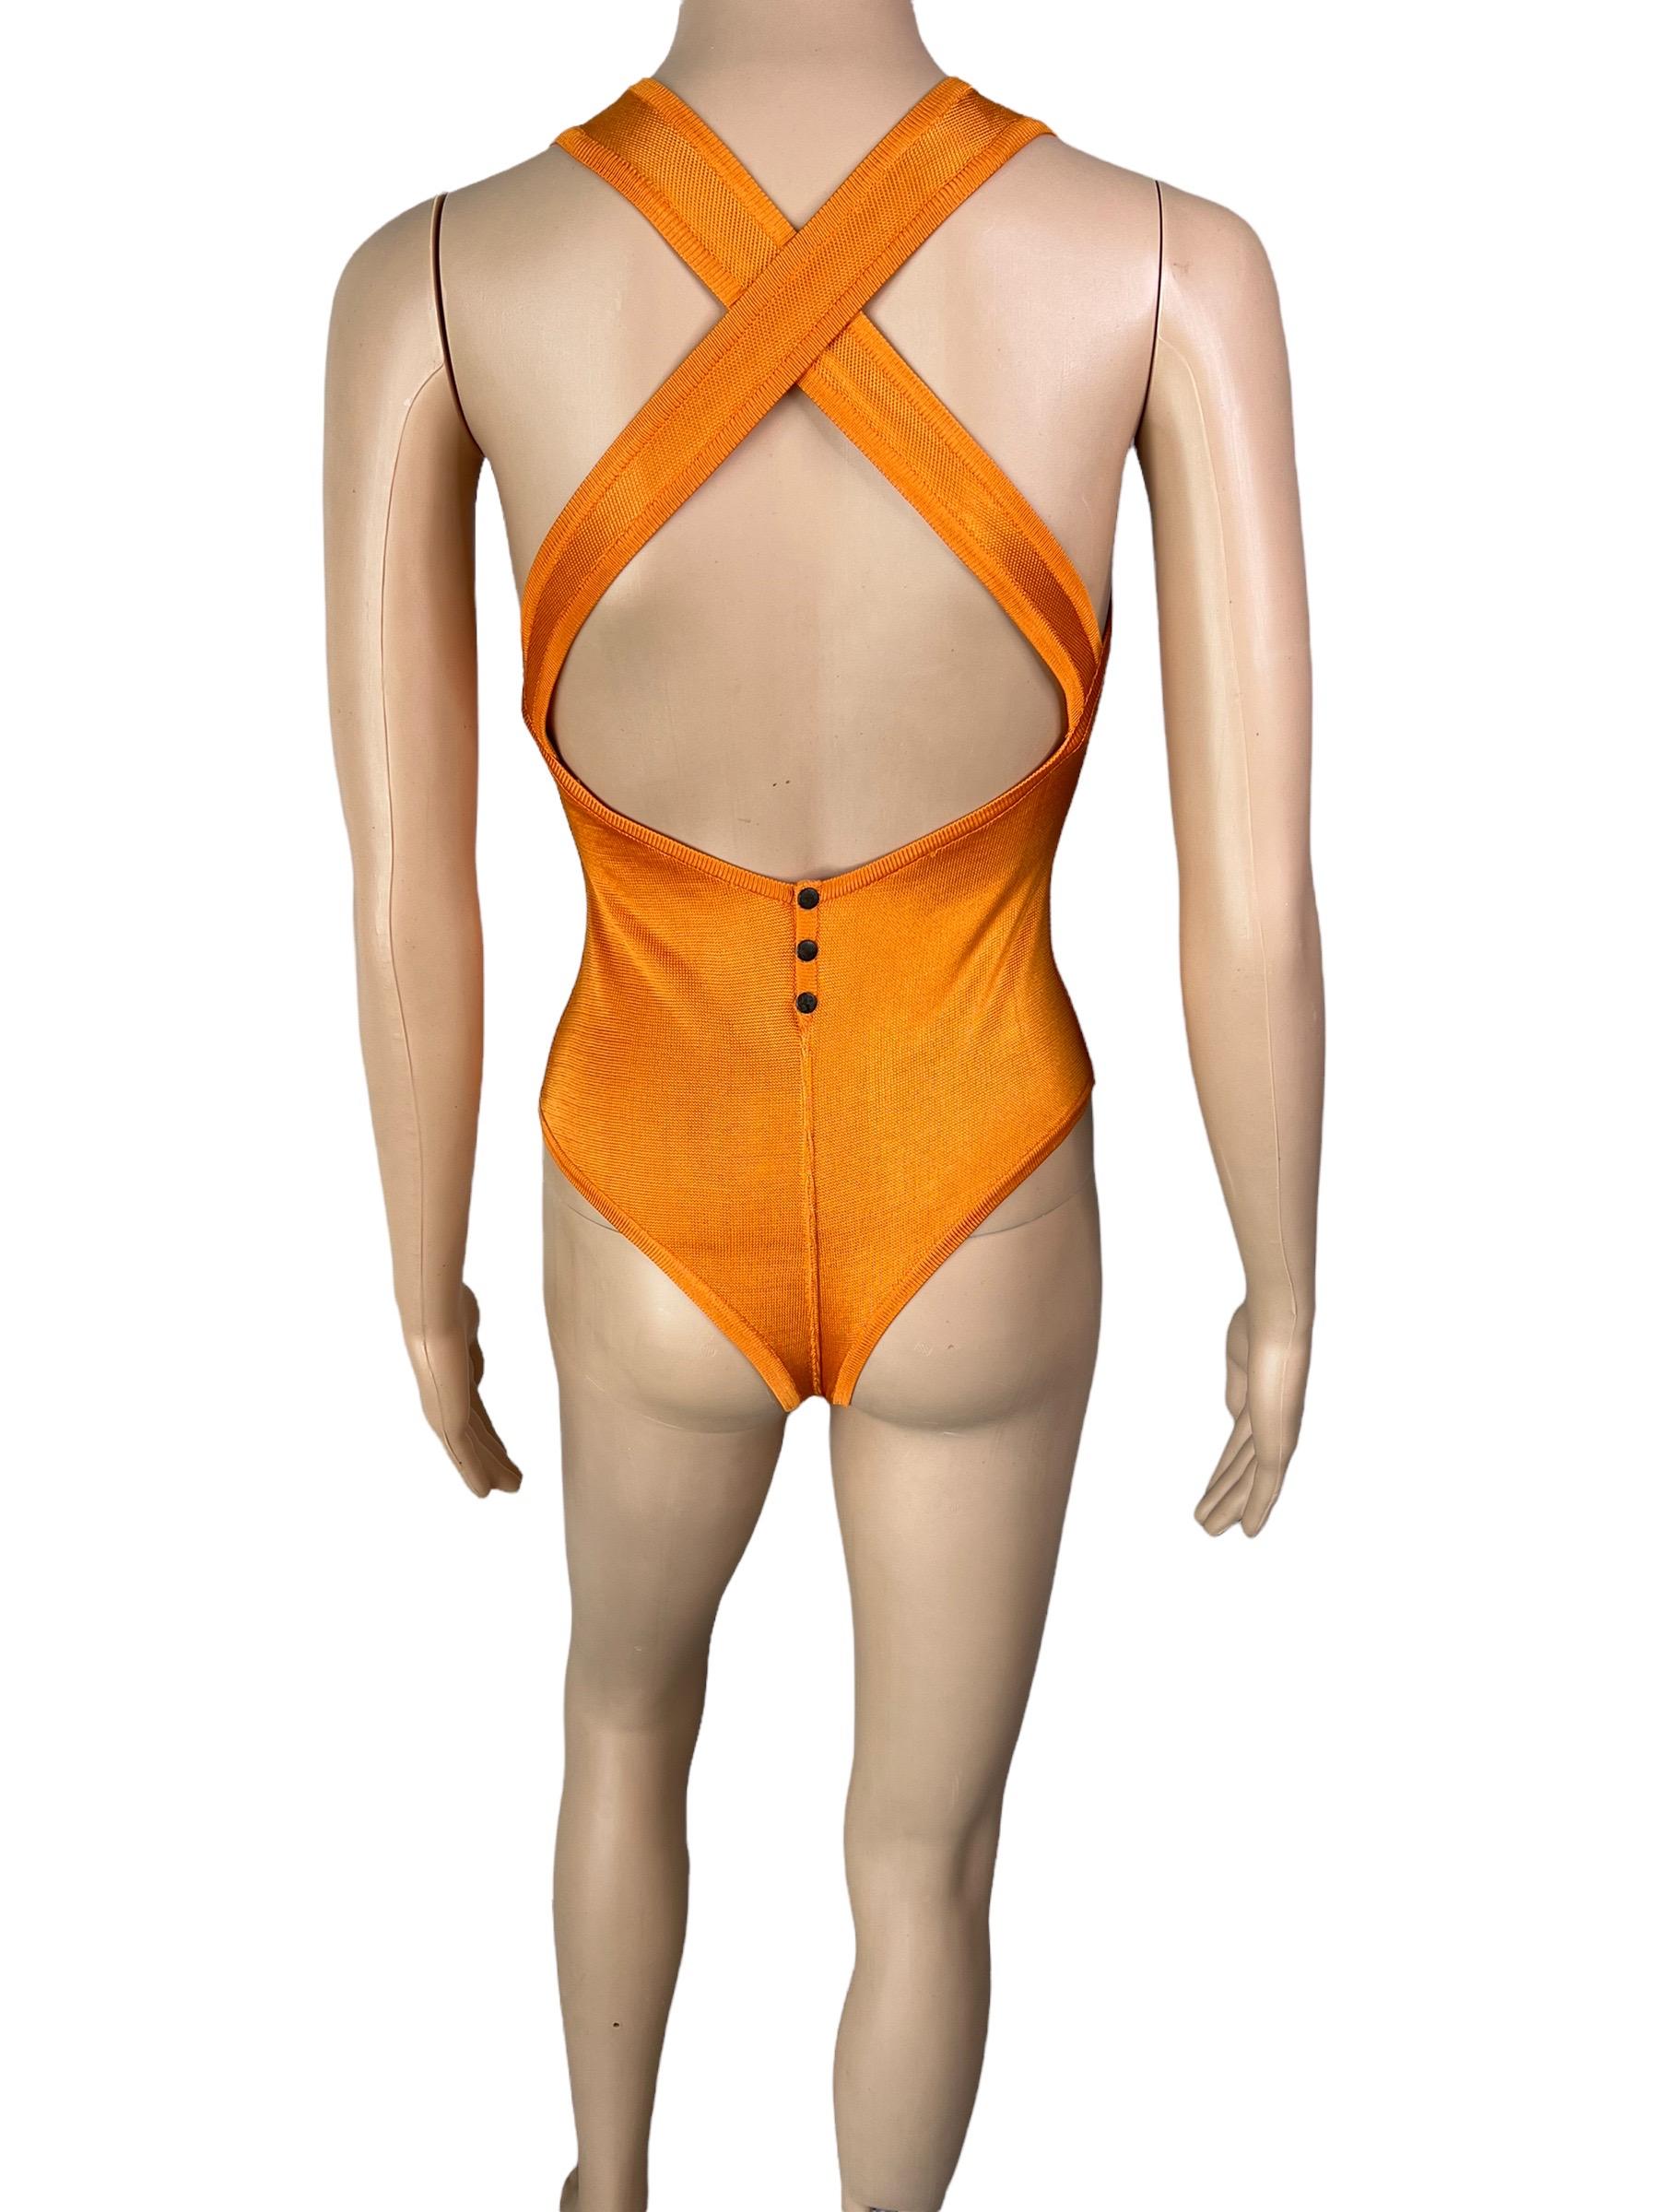 Azzedine Alaia Vintage S/S 1986 Open Back Orange Bodysuit Top In Excellent Condition For Sale In Naples, FL